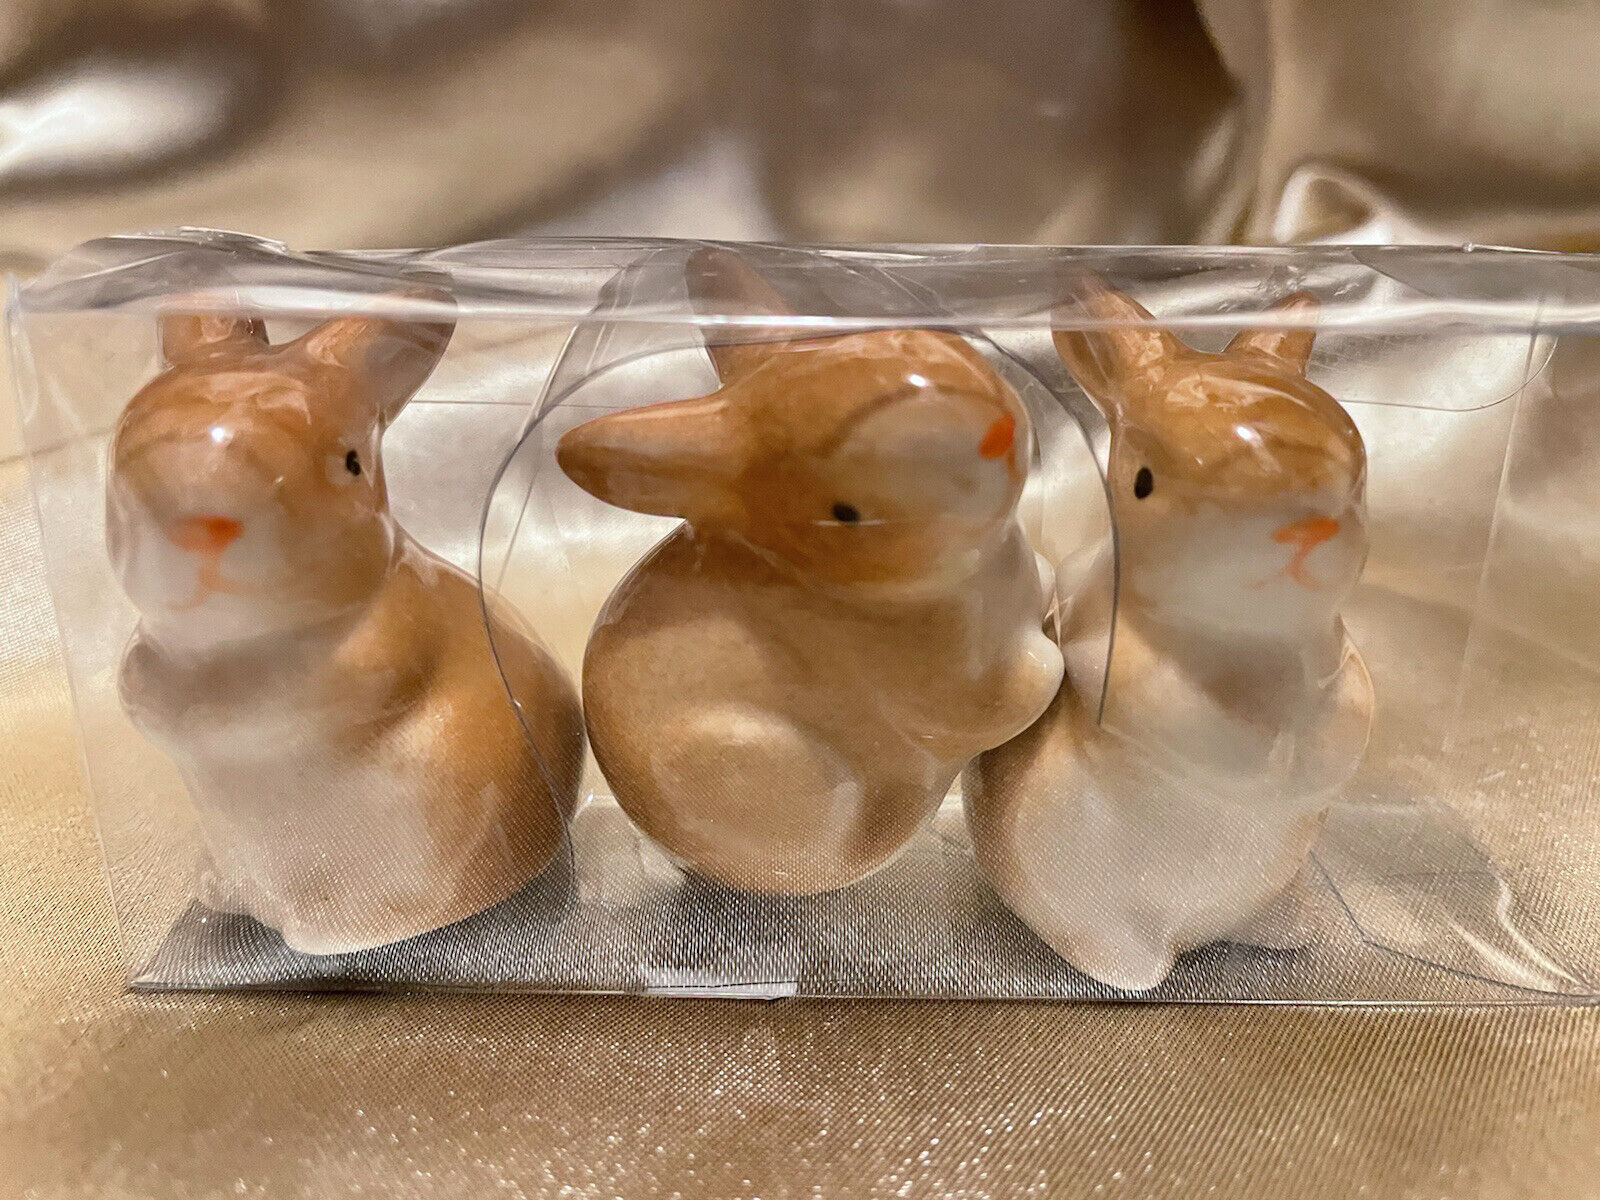 Three Minature Bunnies Rabbit Figurines